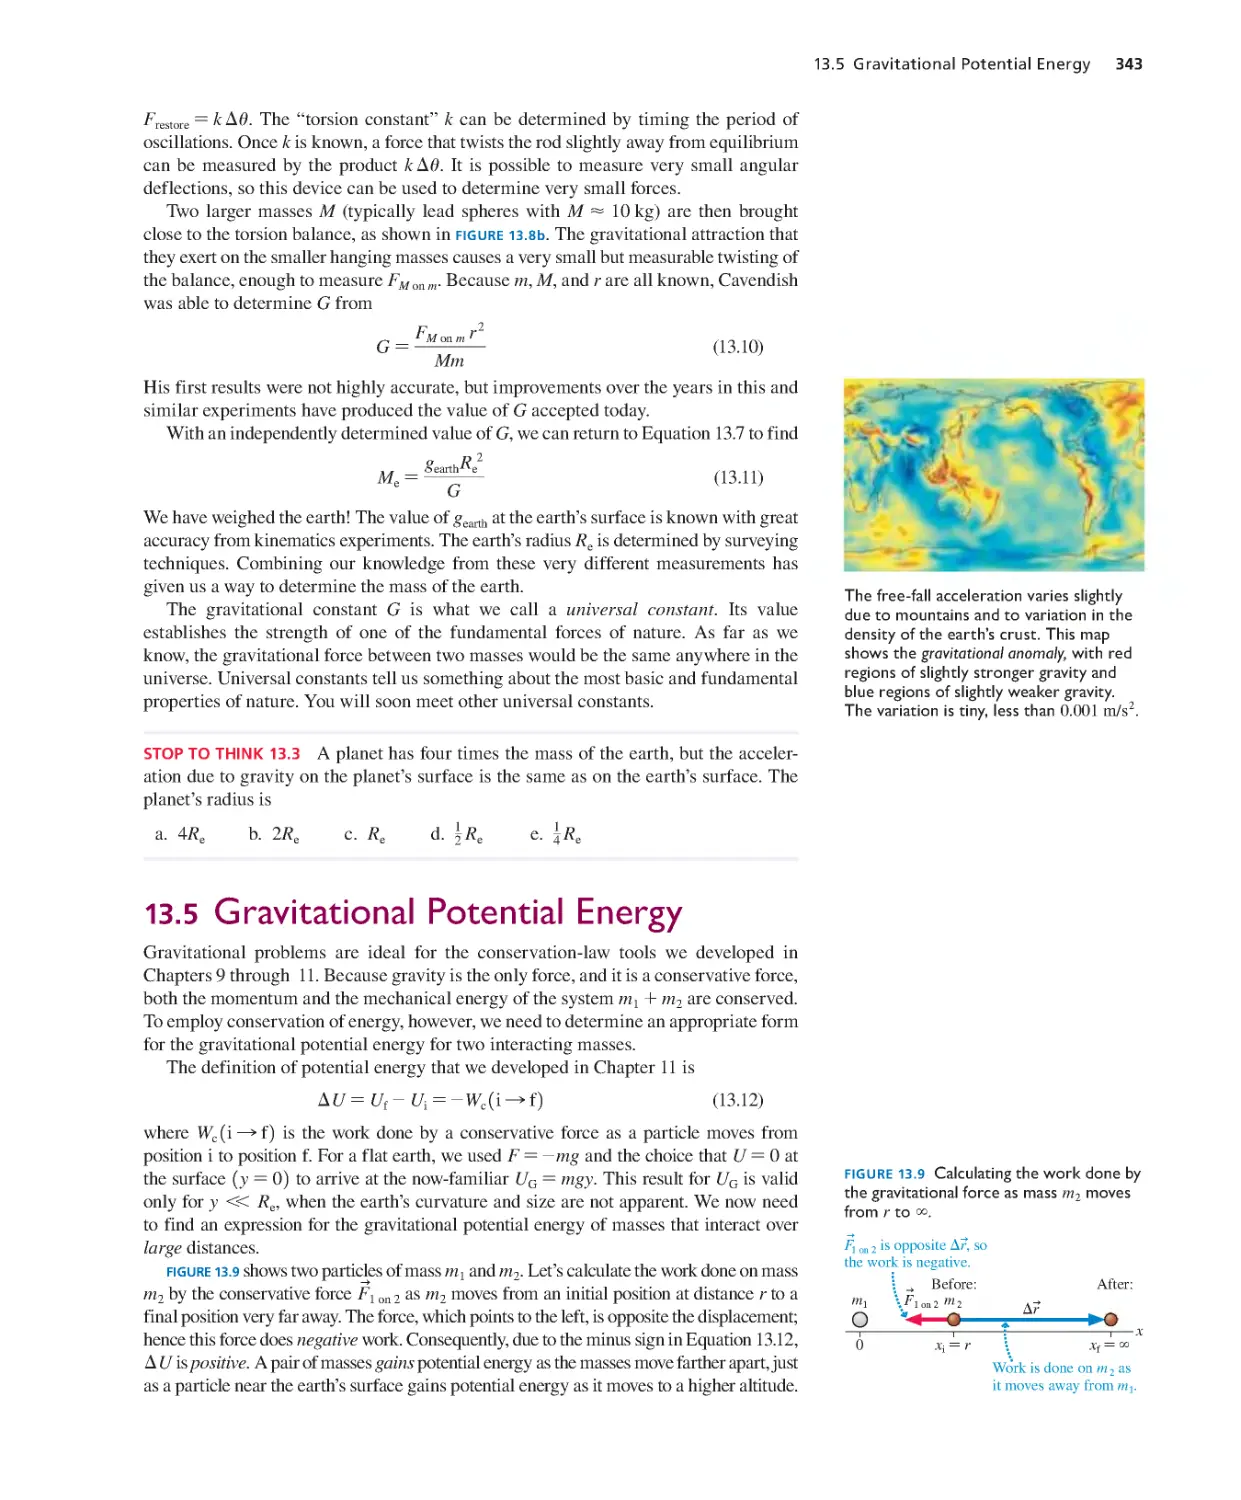 13.5. Gravitational Potential Energy